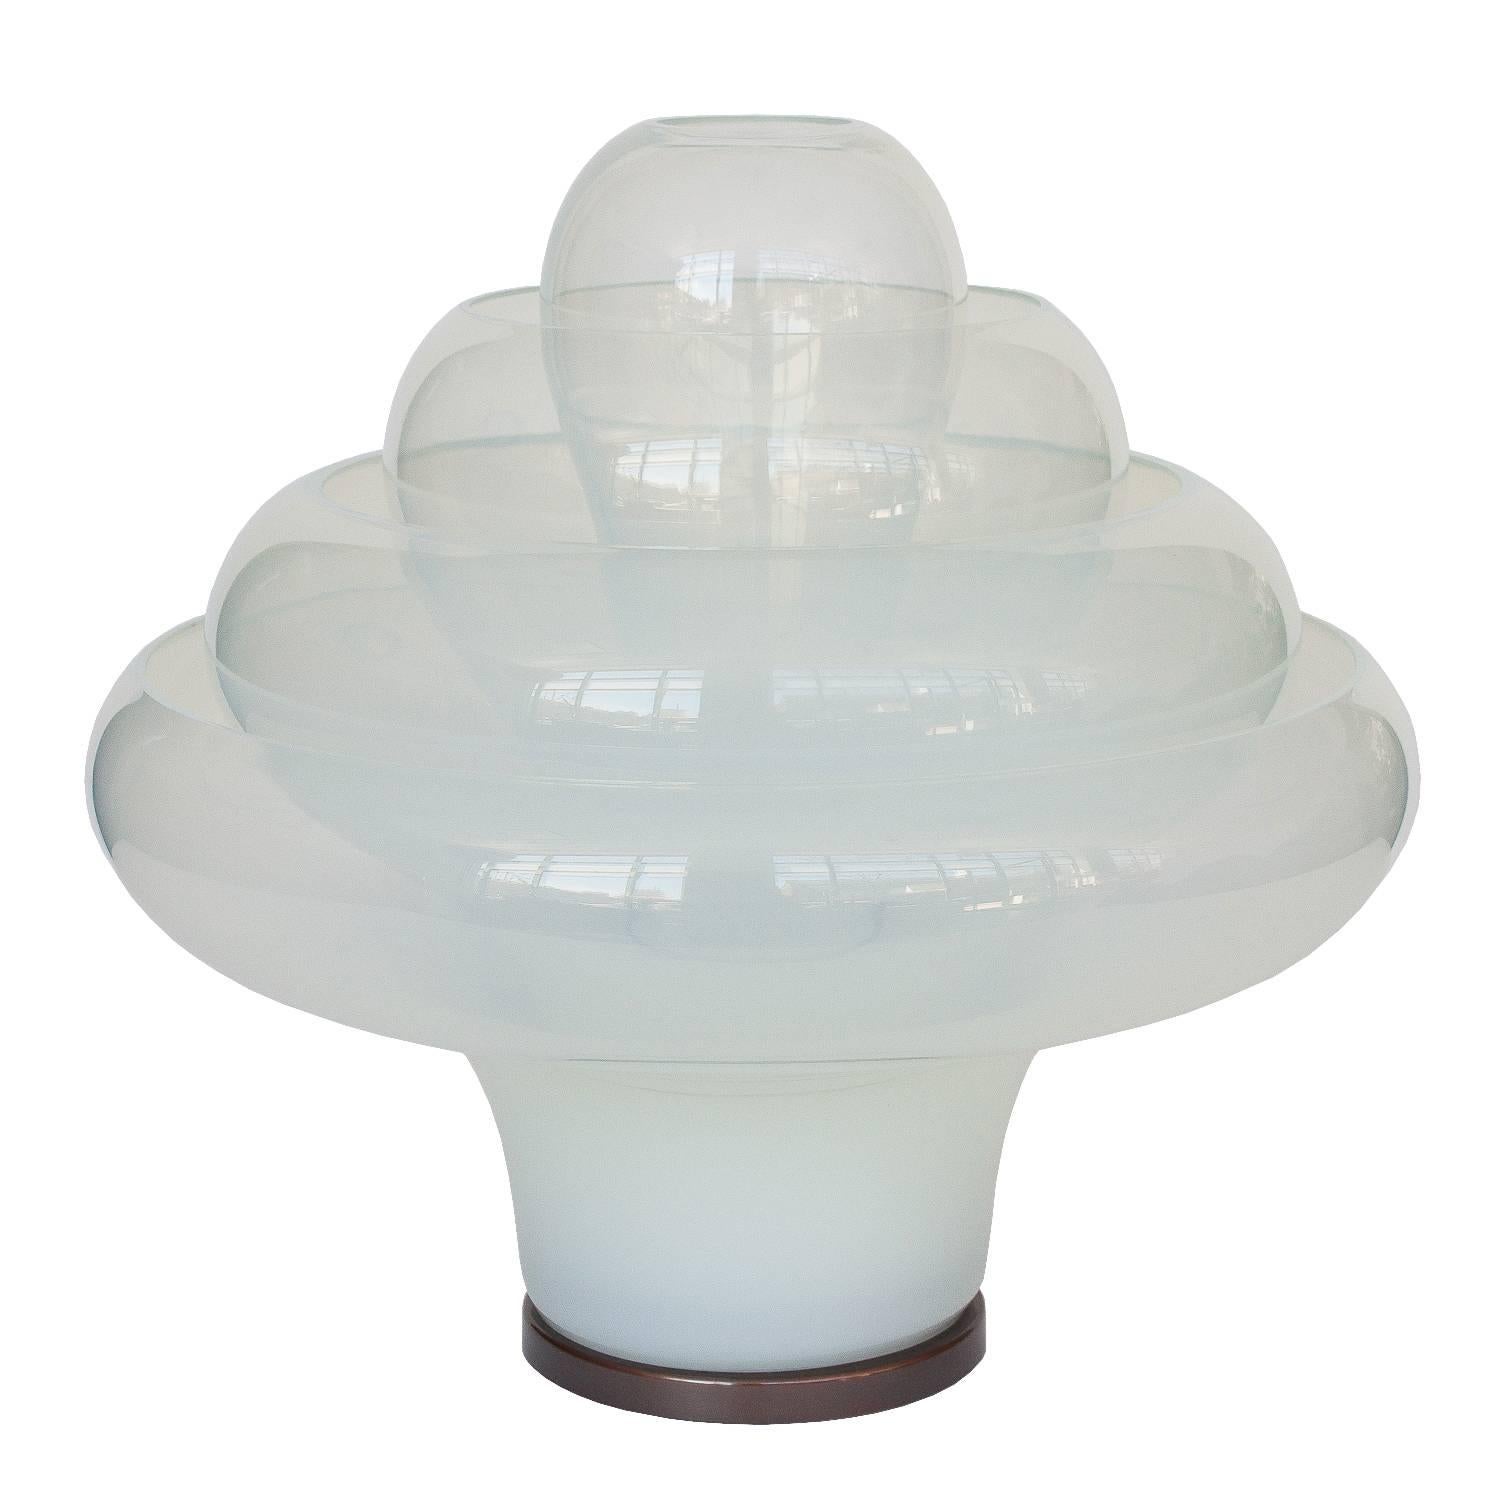 Carlo Nason "Lotus" Table Lamp for Mazzega